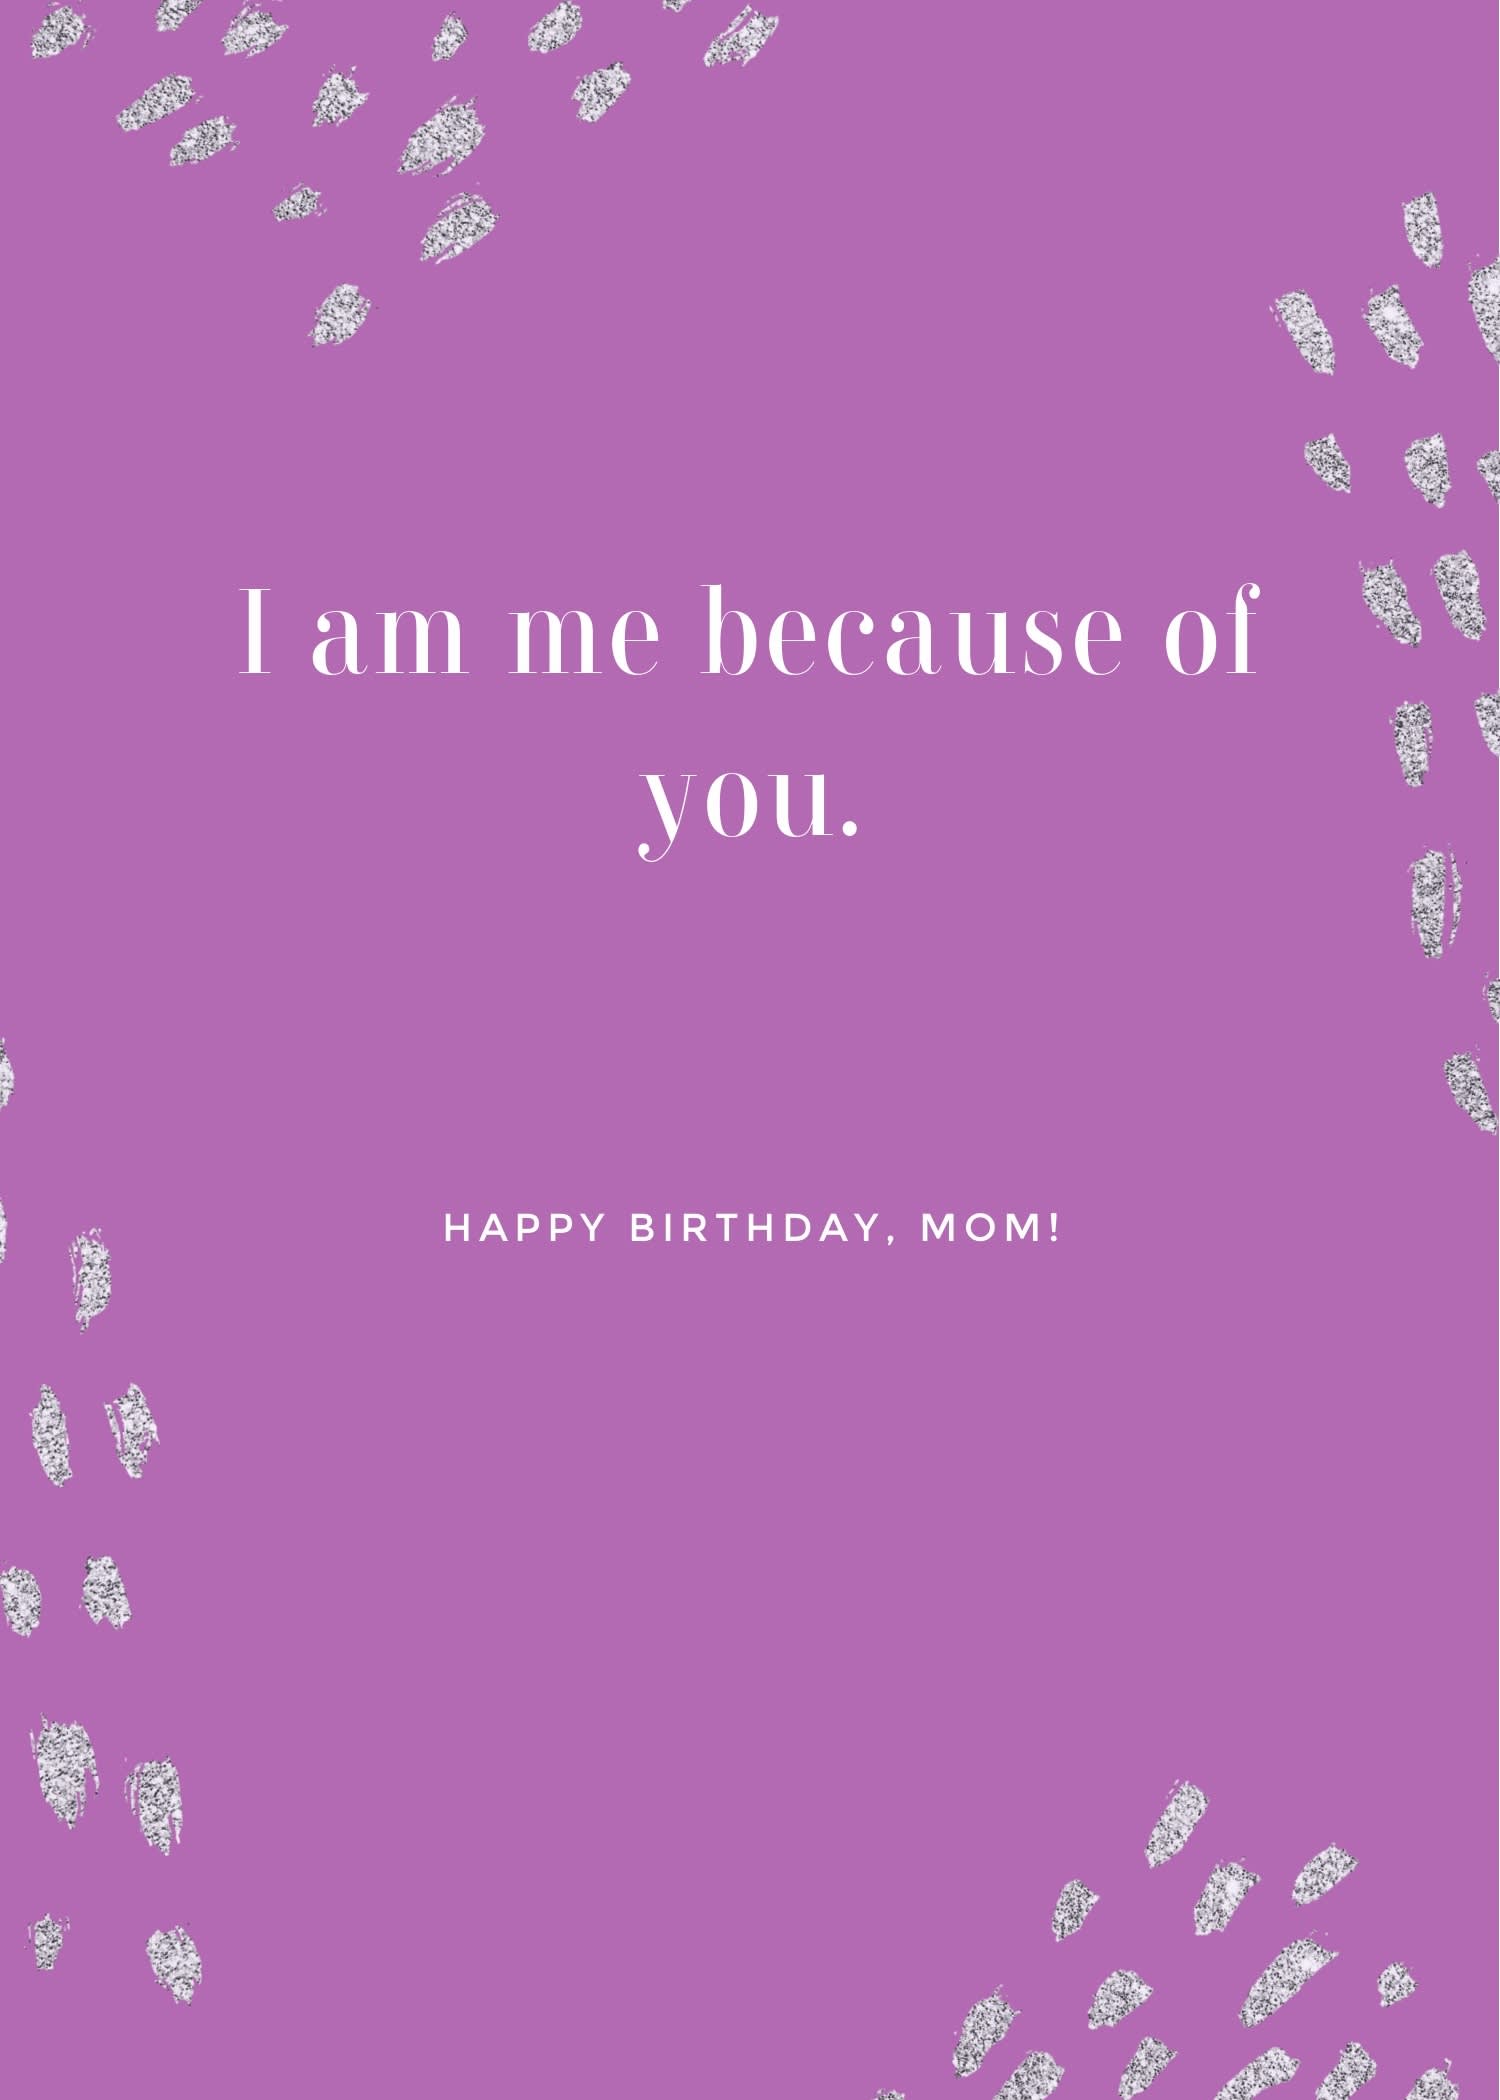 Mom Happy Birthday - Free Printable Birthday Cards For Mom - Plus